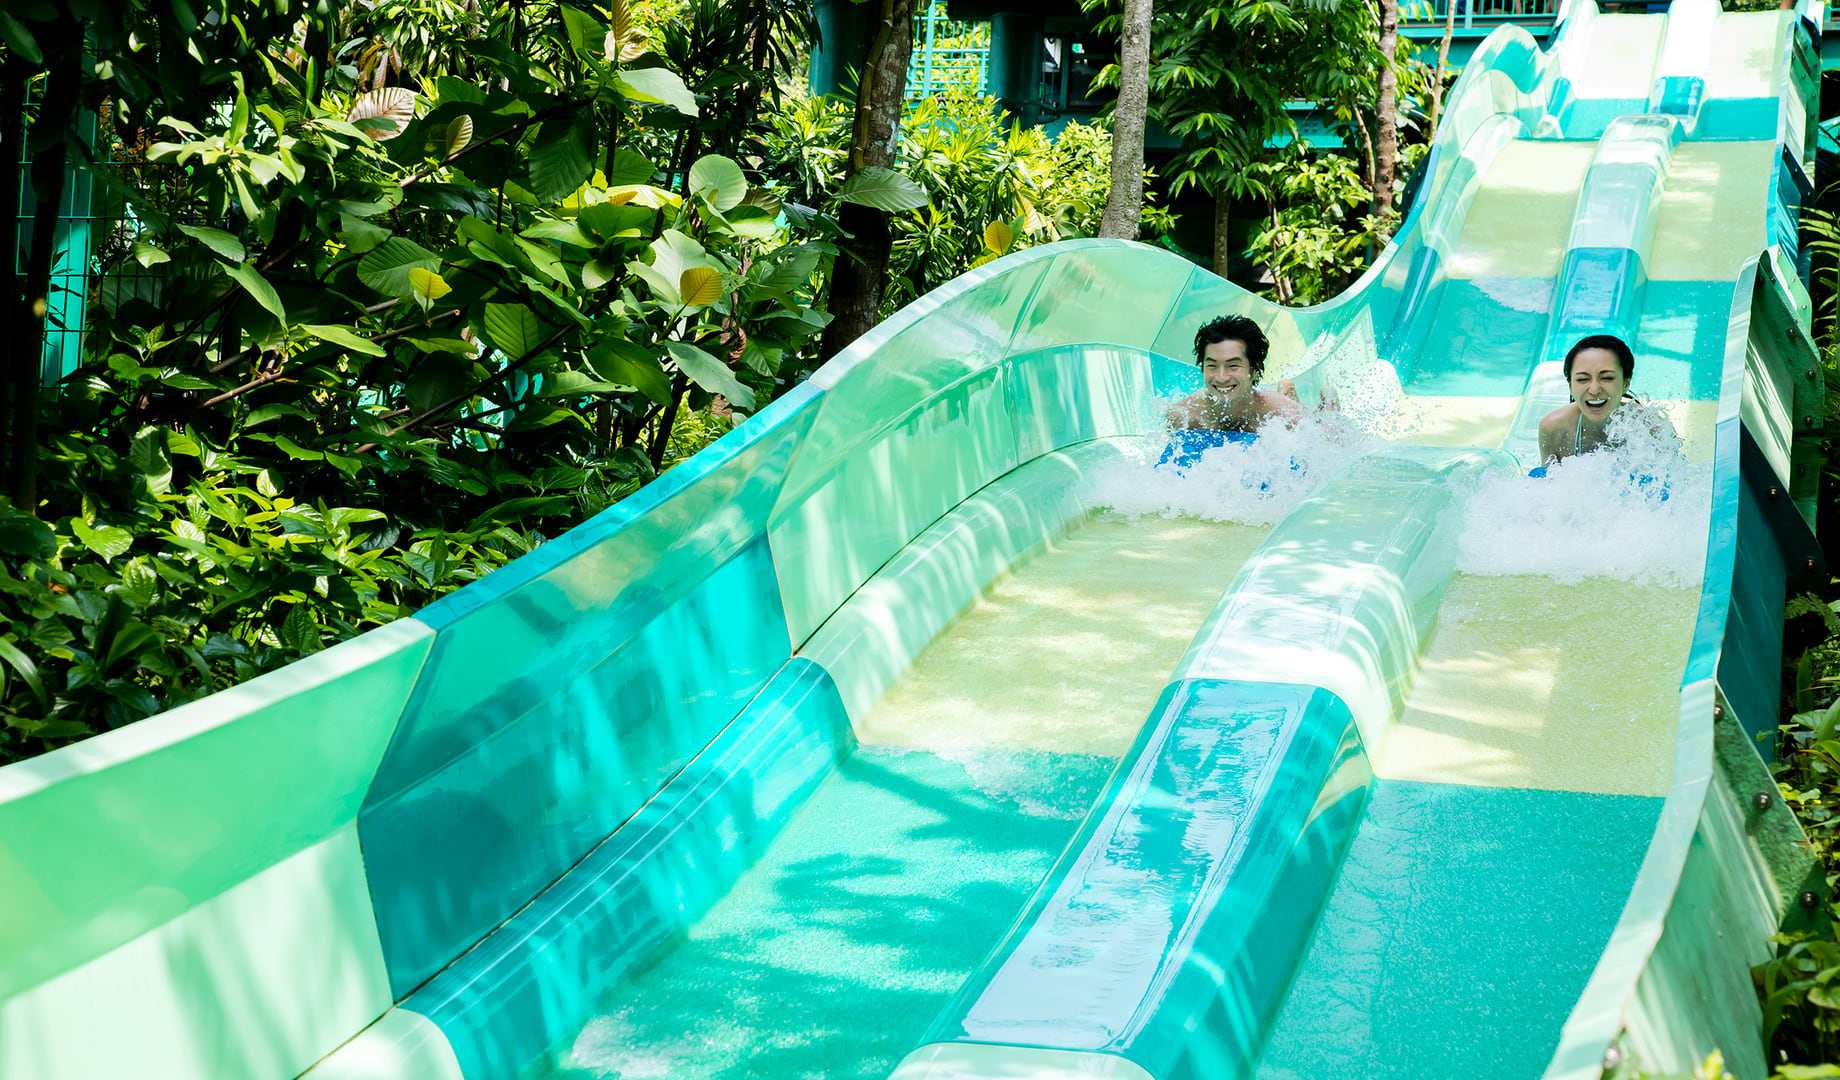 Splash into Fun: Adventure Cove Waterpark and Wild Wild Wet Singapore